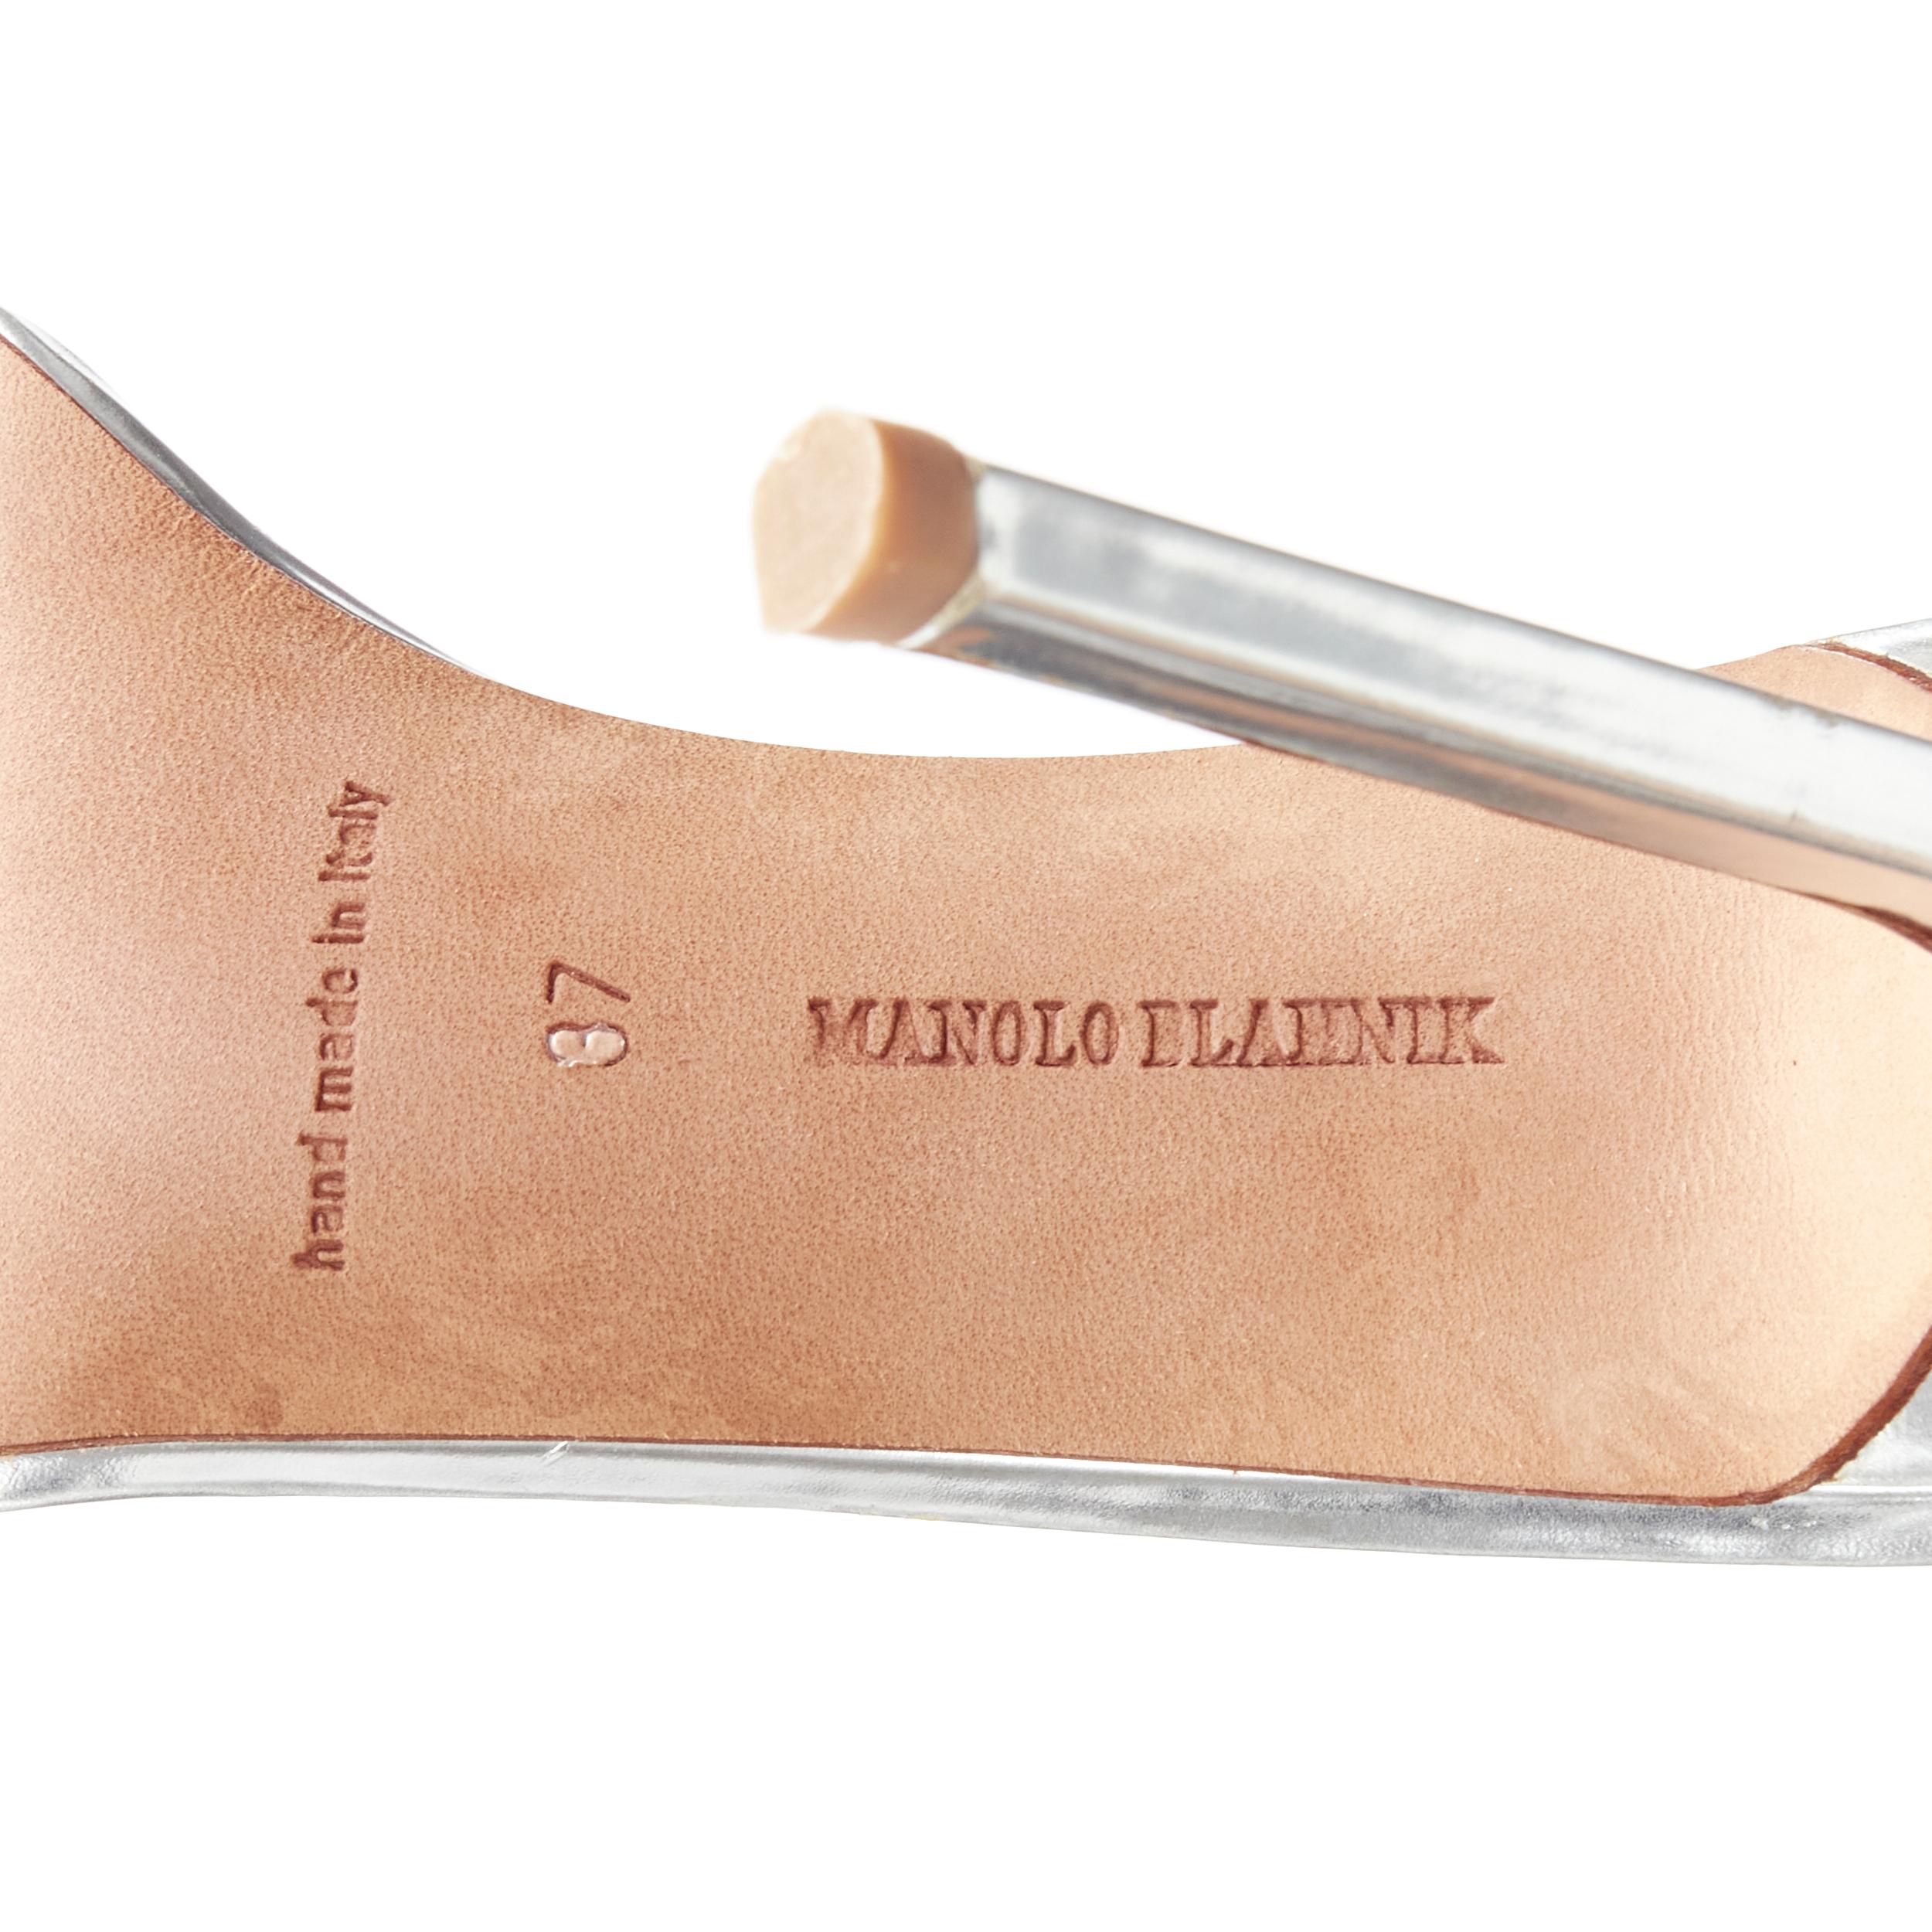 MANOLO BLAHNIK silver chunky chain lock ankle strap high heel sandal EU37 US7 For Sale 3